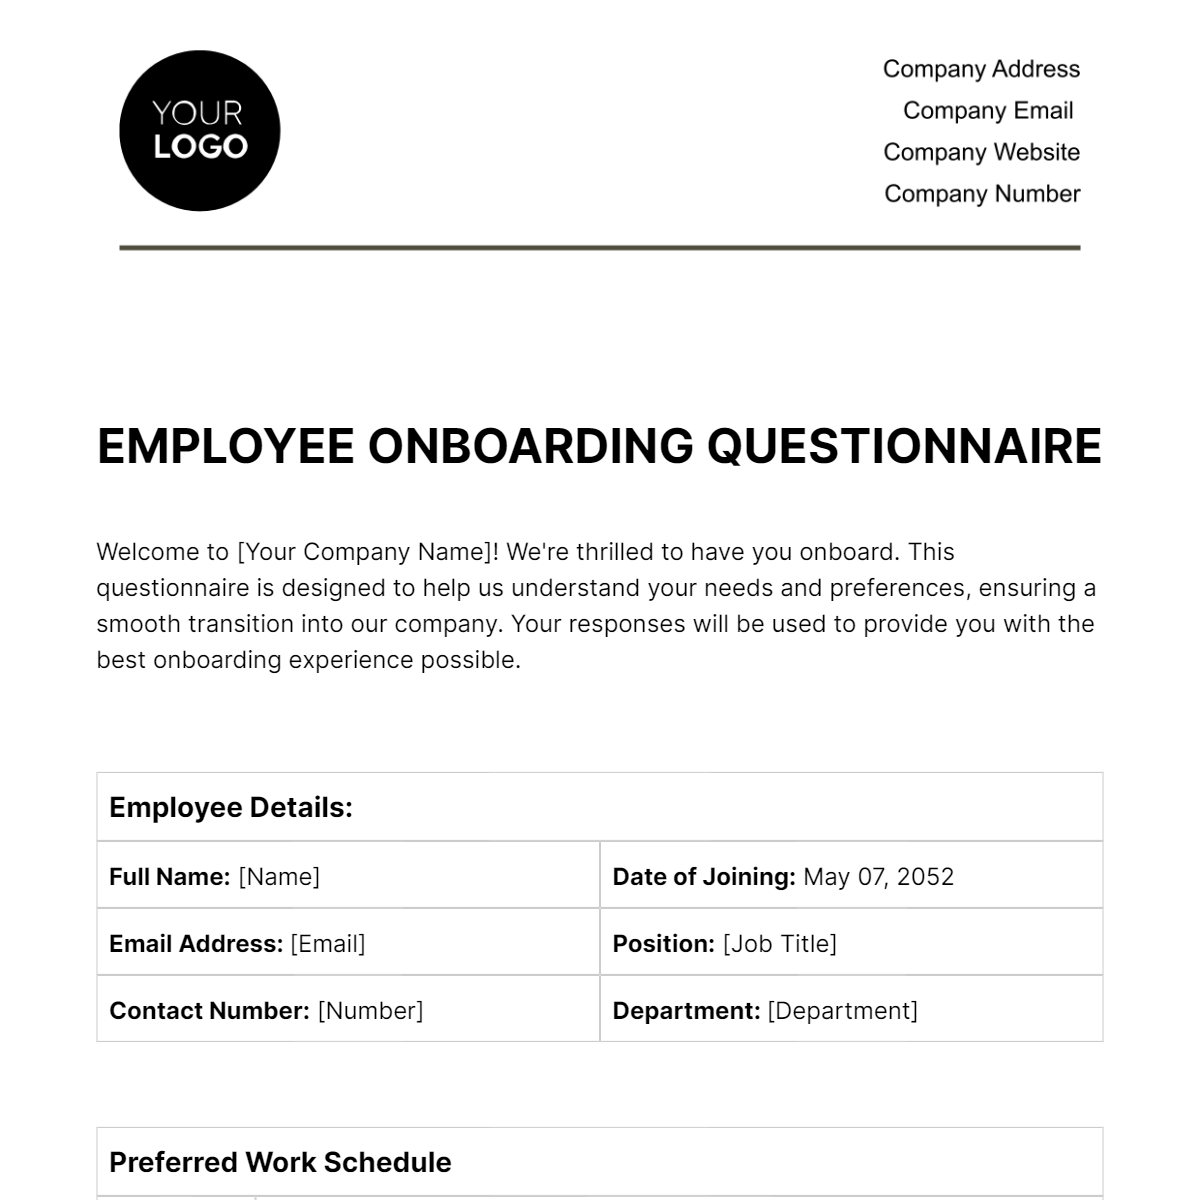 Employee Onboarding Questionnaire HR Template